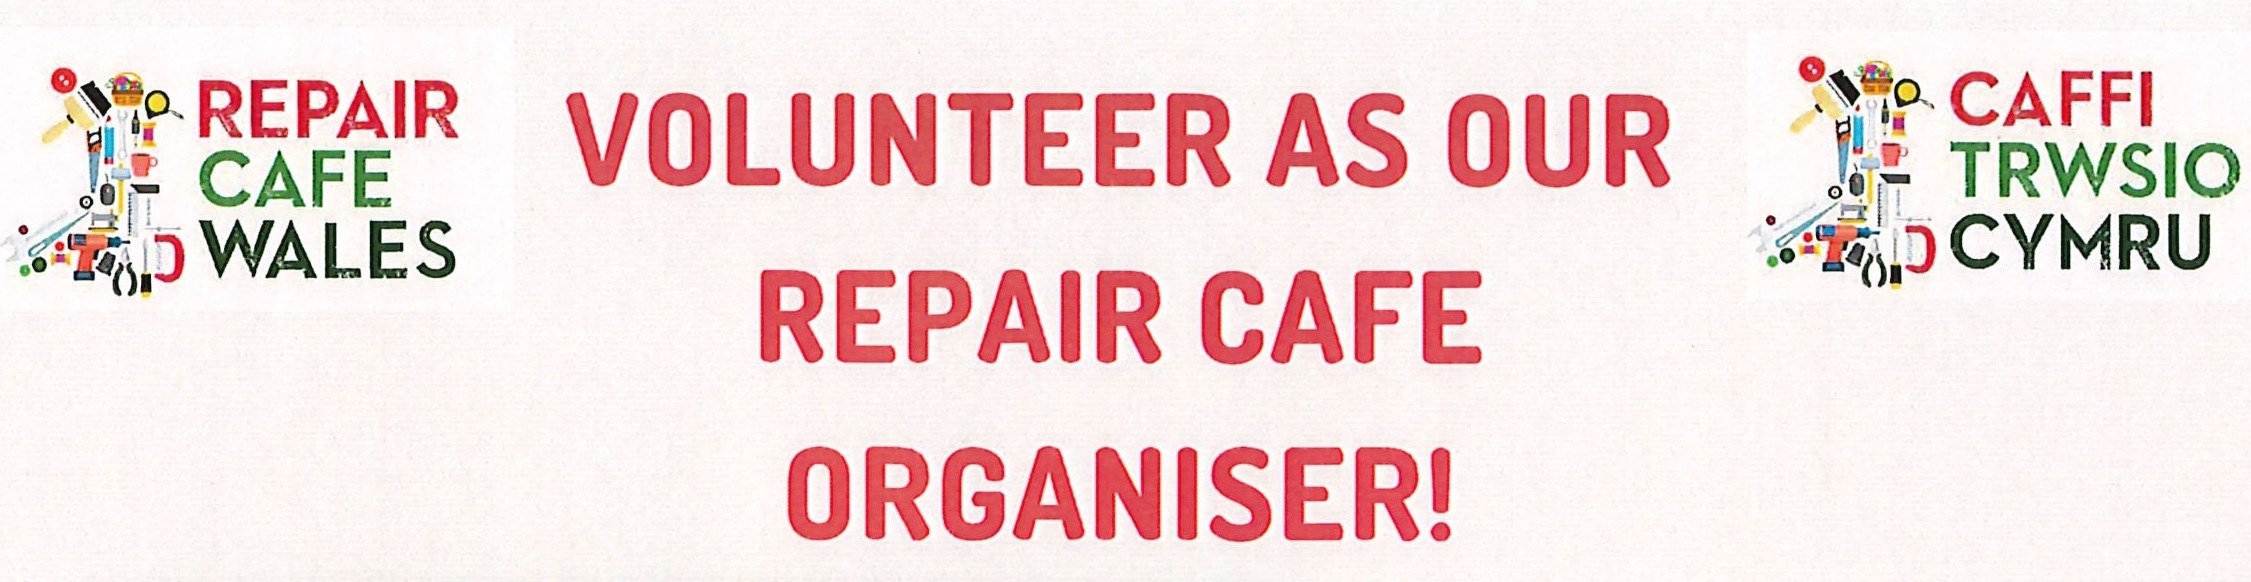 Repair Cafe organiser role